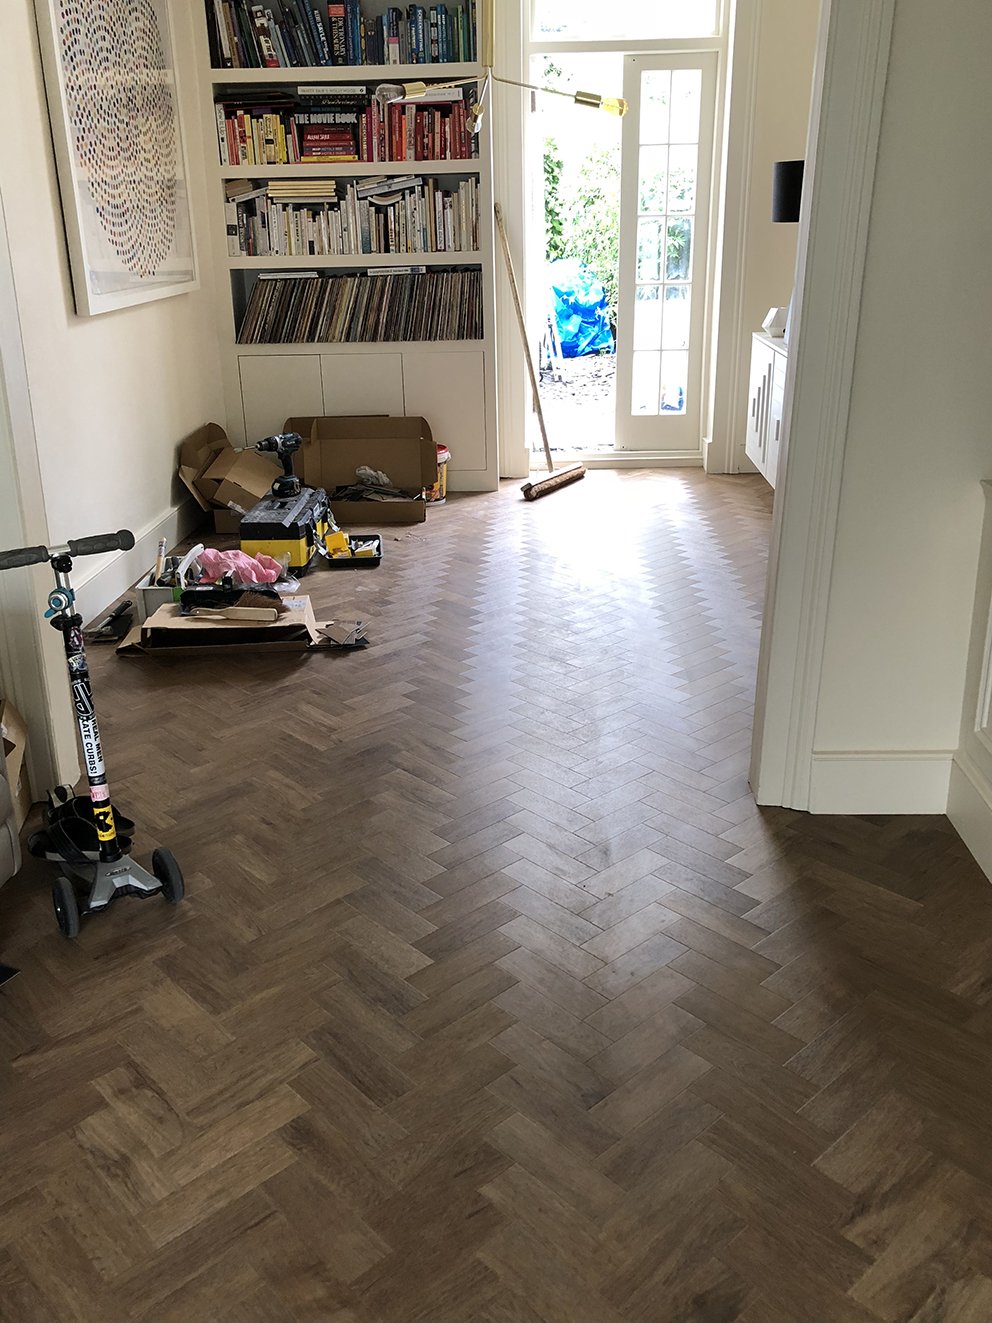 Amtico Flooring Installation AKA My Dream Parquet Floor - French For Pineapple Blog